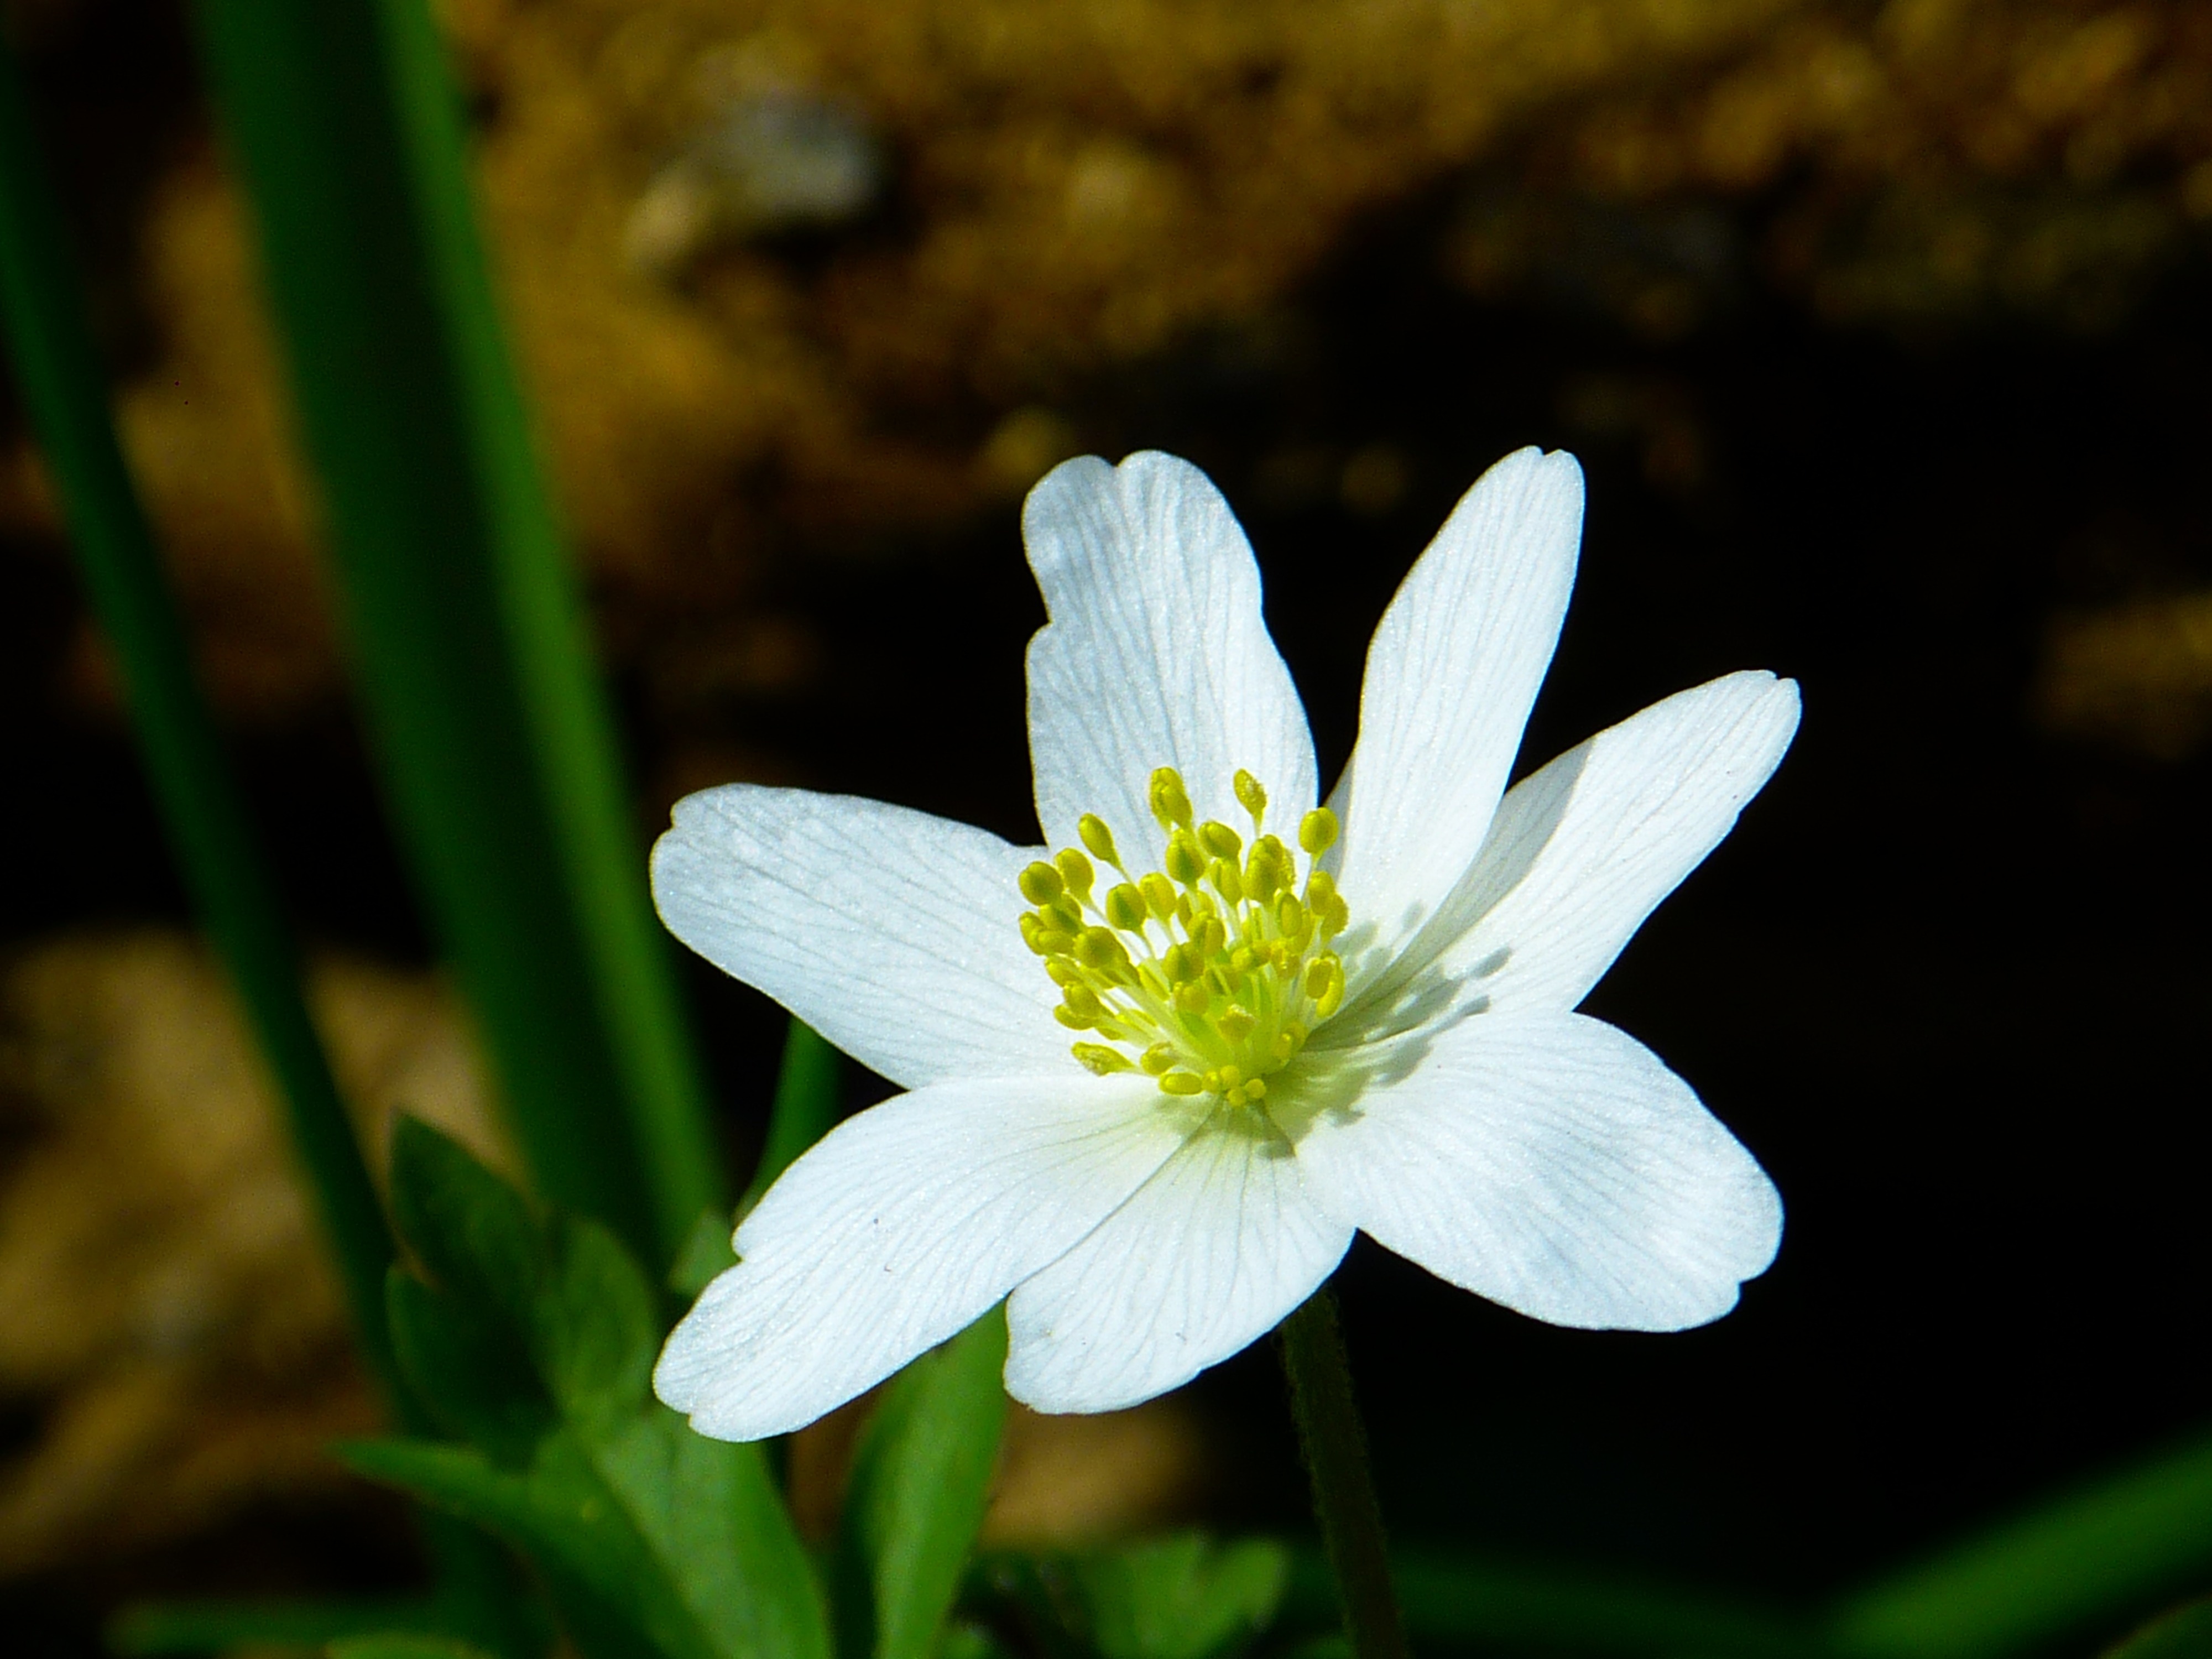 Wood Anemone, Spring, Flower, Blossom, flower, white color